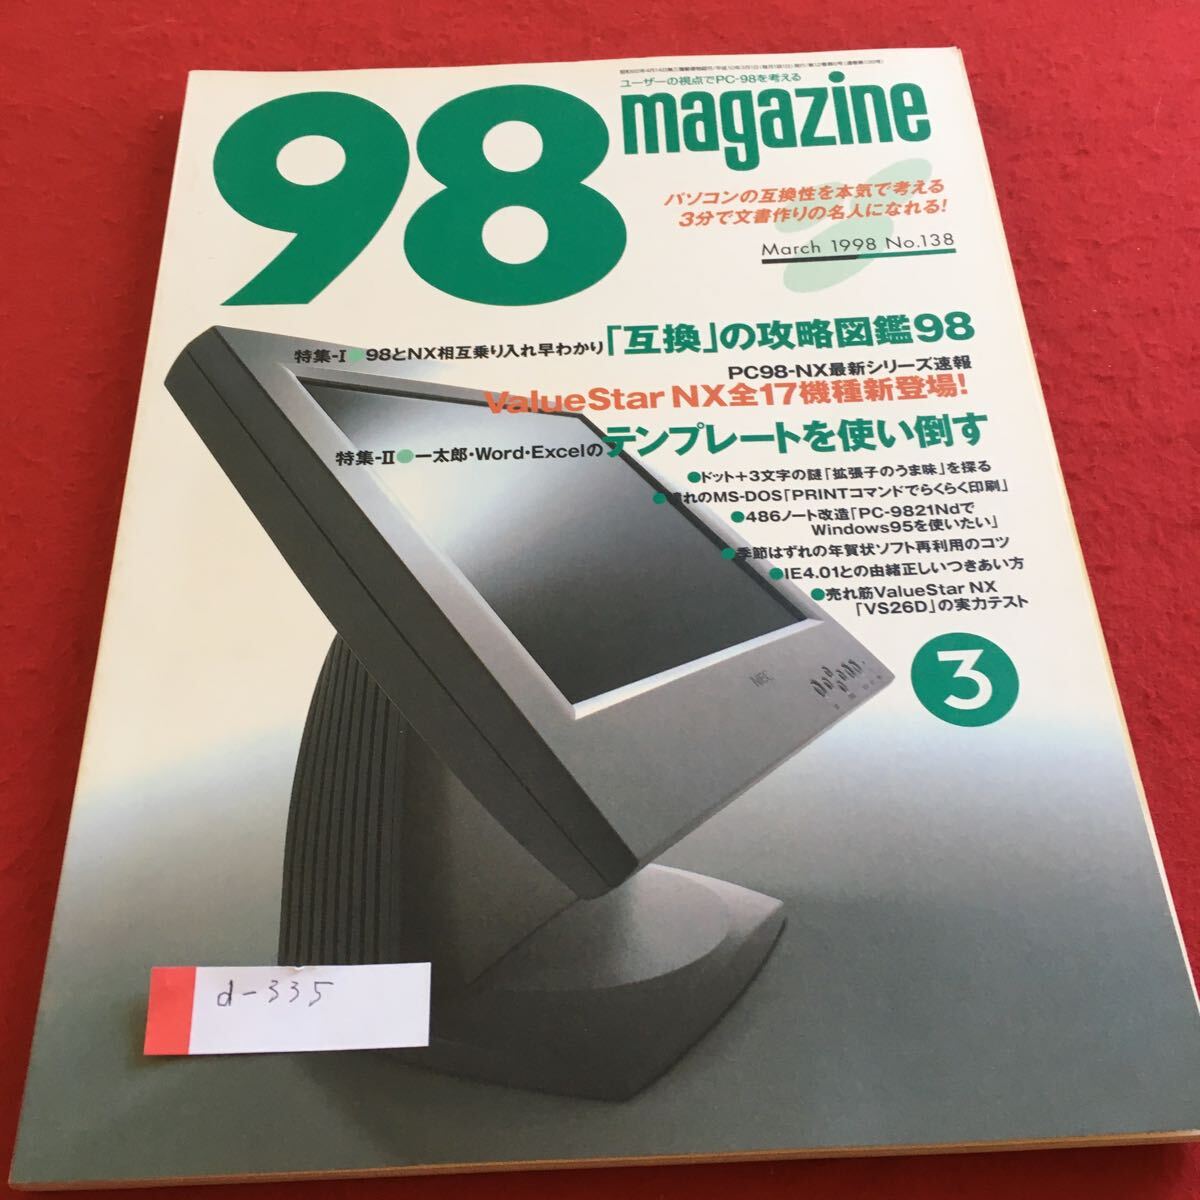 d-335 98magazine 1998年3月号 特集I パソコンの互換性を本気で考えた／特集II 一太郎WordExcelテンプレート活用術 エーアイ出版※4_画像1